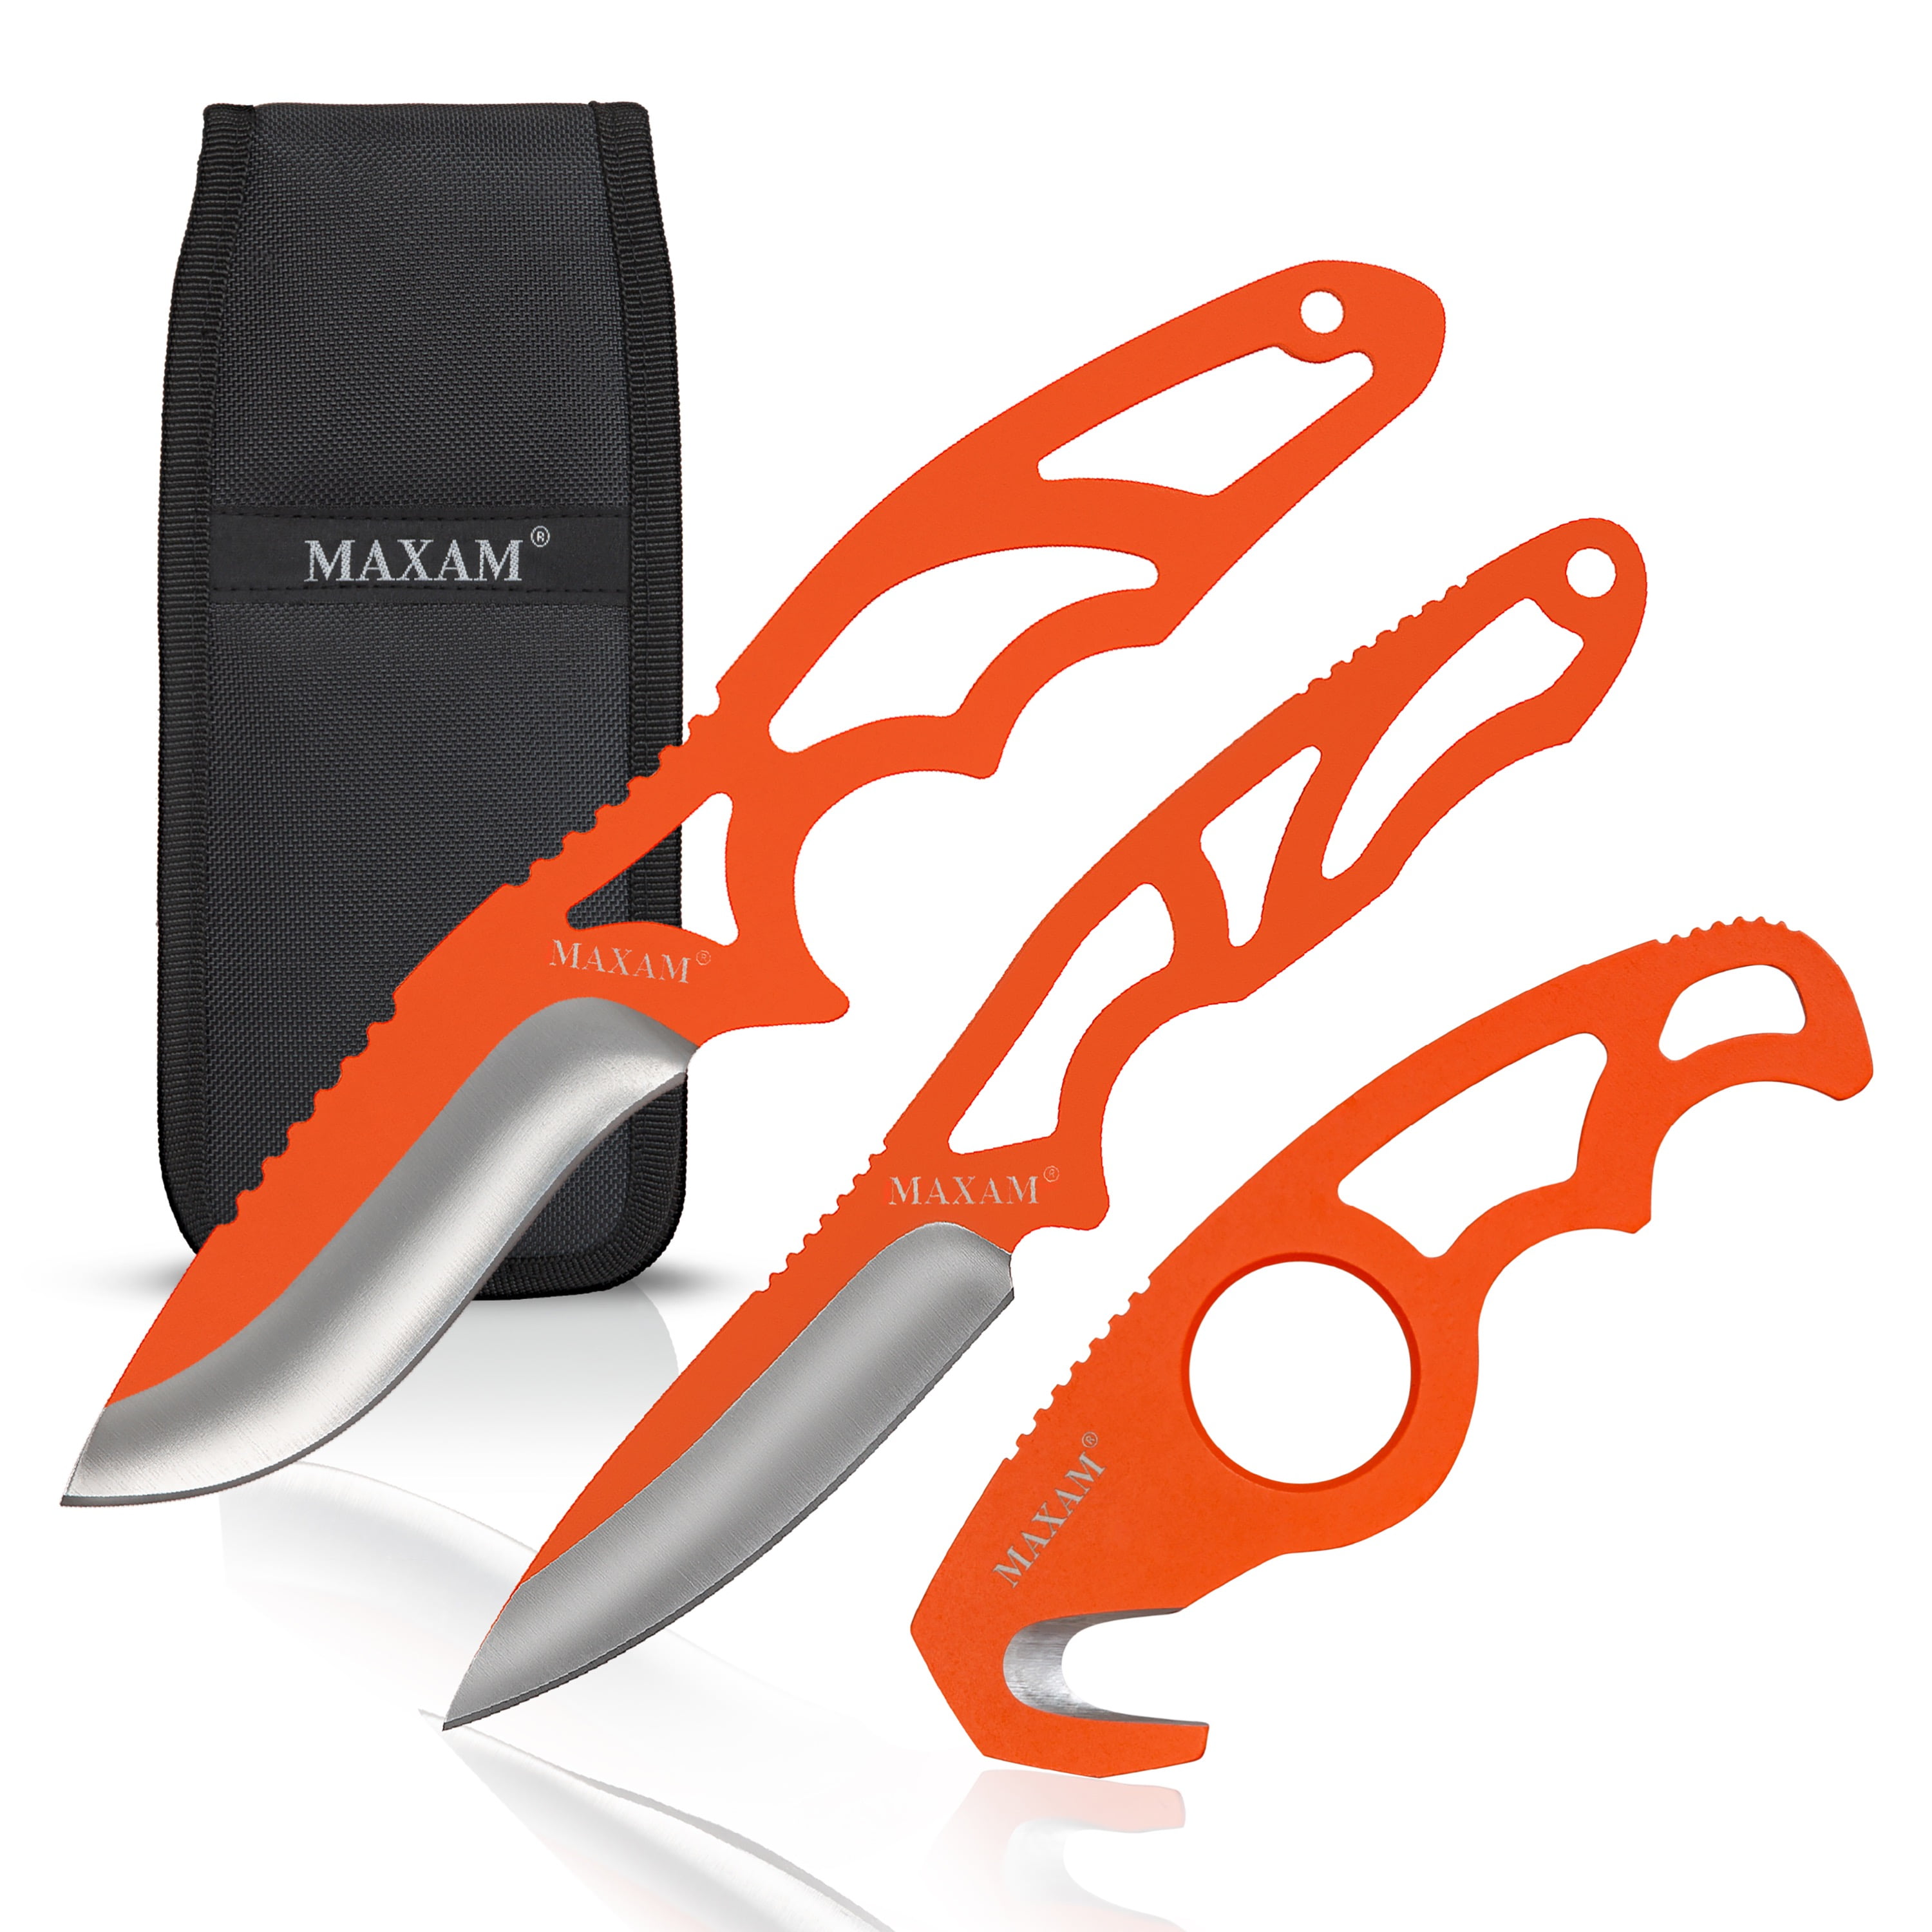 Maxam Falcon IV 4 Inch Lockback Keychain KnifeSK7002 for sale online 